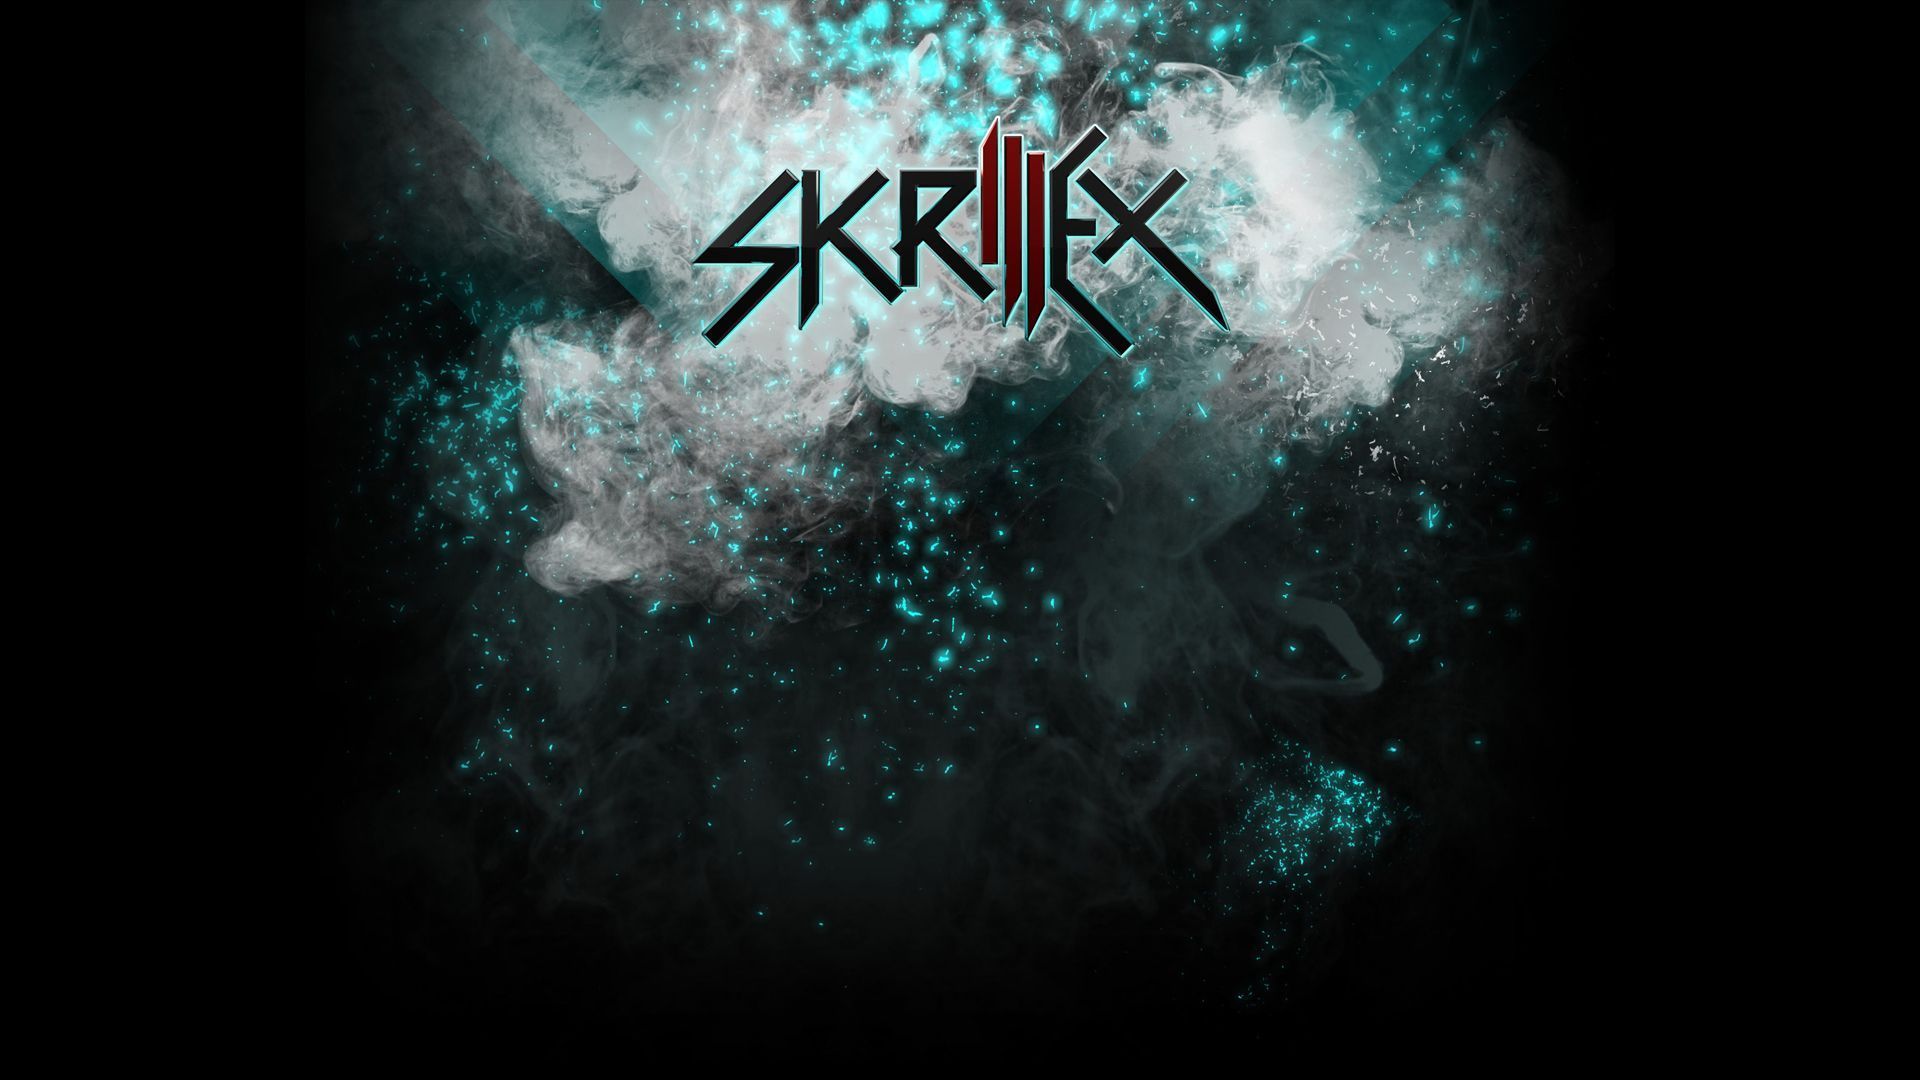 skrillex Archives - DJ Pictures & HD Wallpapers